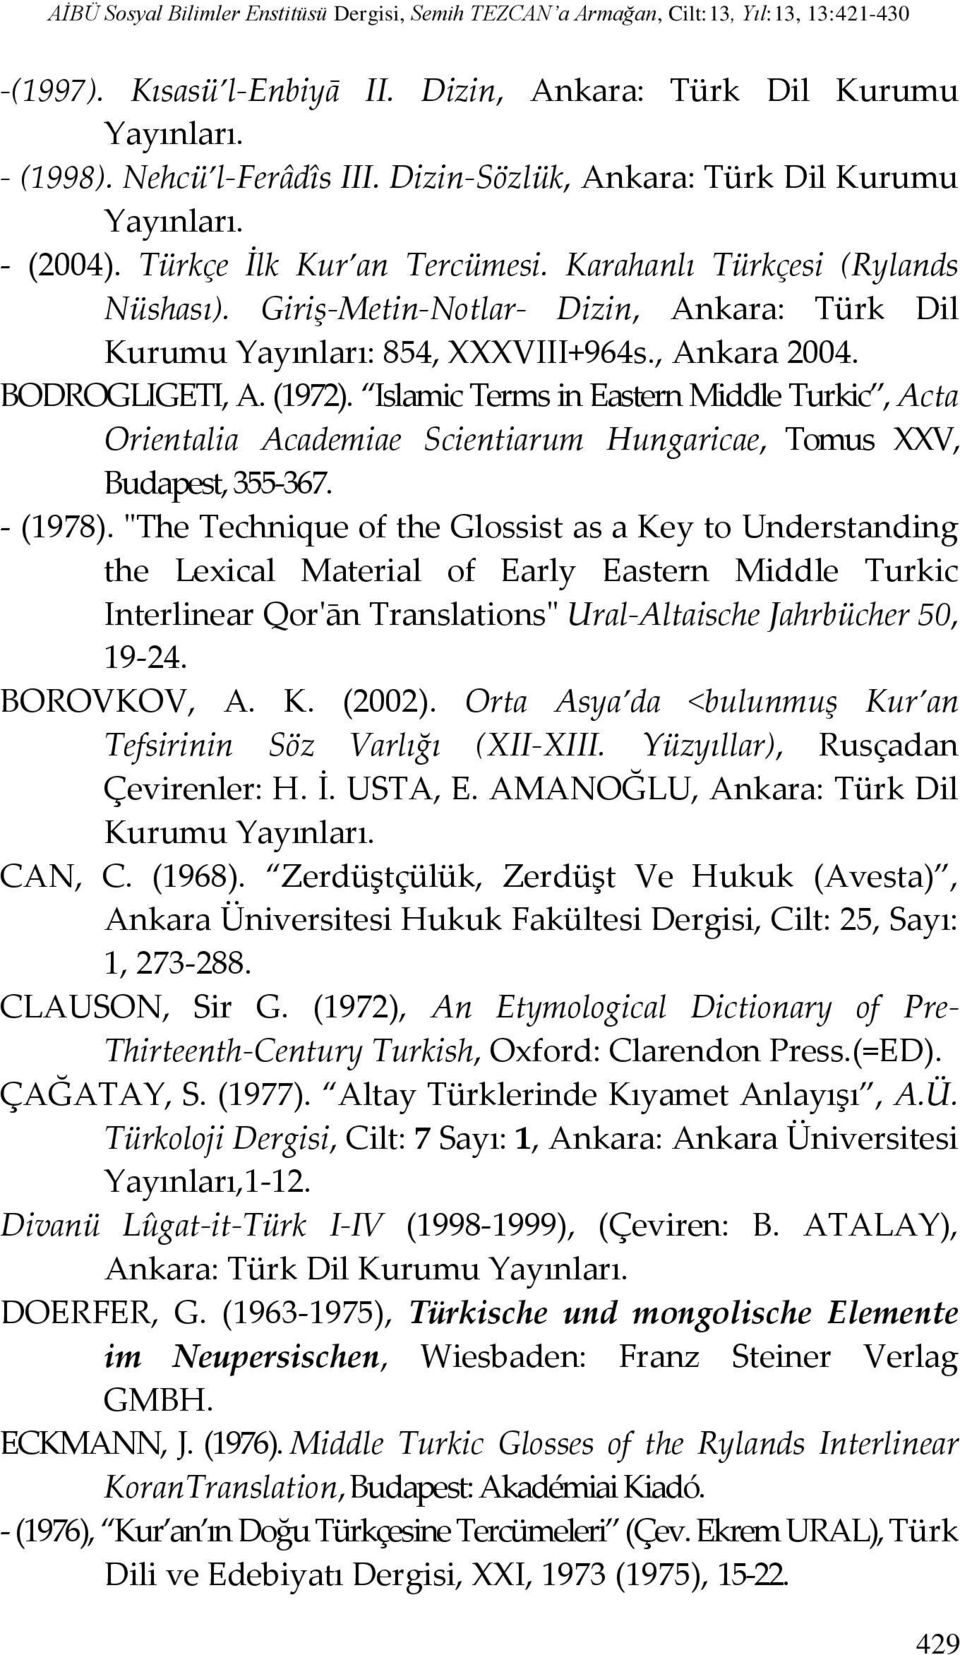 Giriş-Metin-Notlar- Dizin, Ankara: Türk Dil Kurumu Yayınları: 854, XXXVIII+964s., Ankara 2004. BODROGLIGETI, A. (1972).